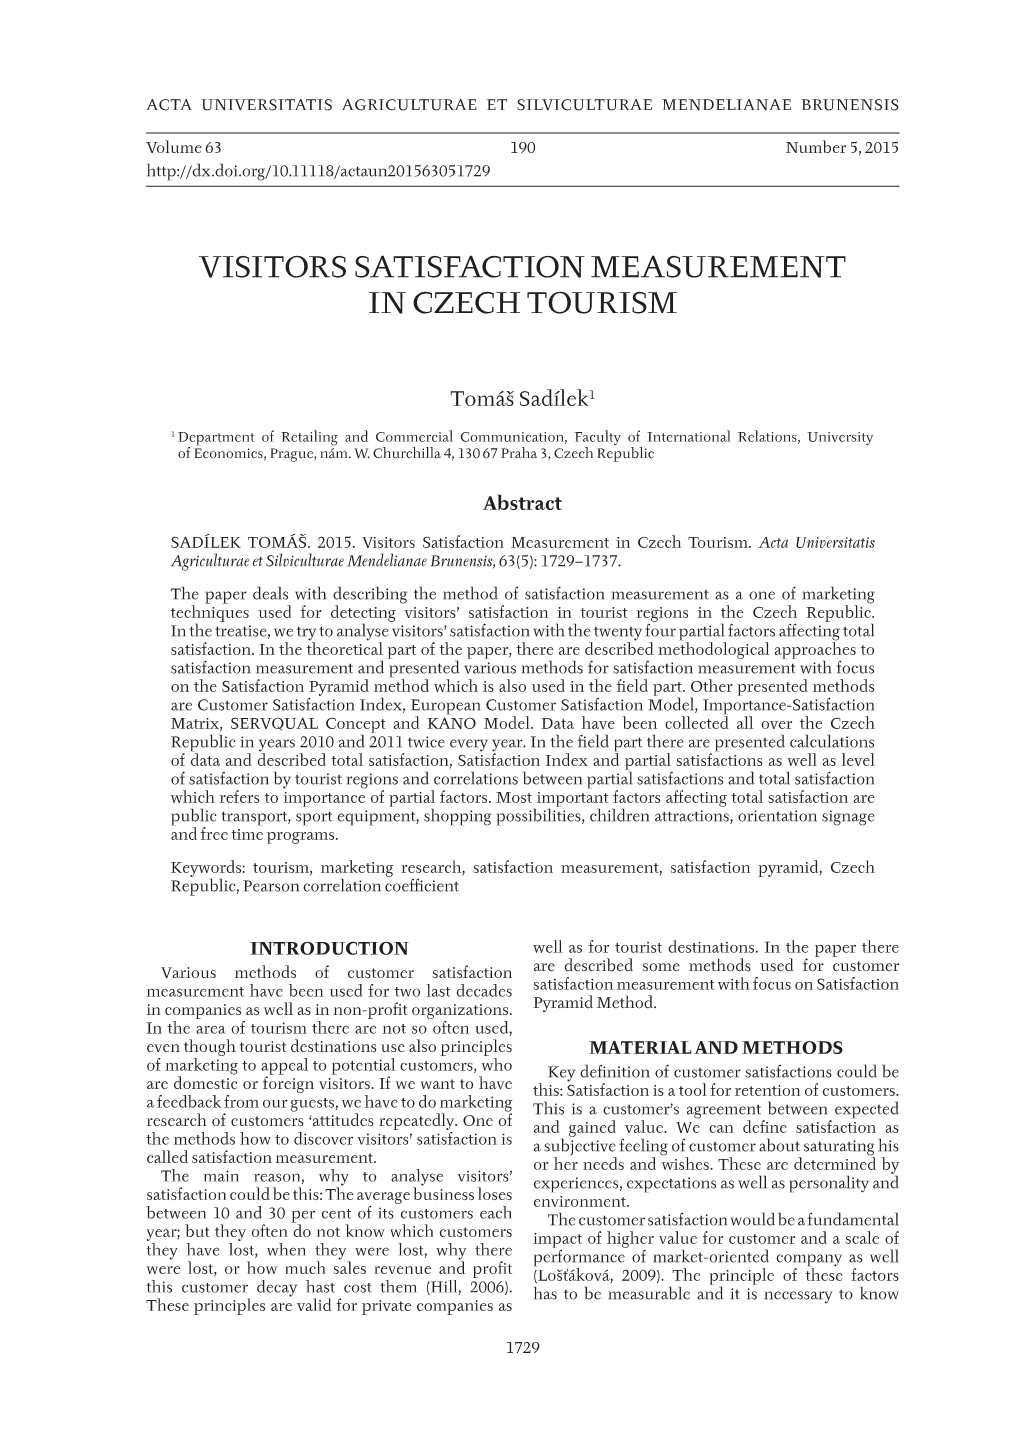 Visitors Satisfaction Measurement in Czech Tourism